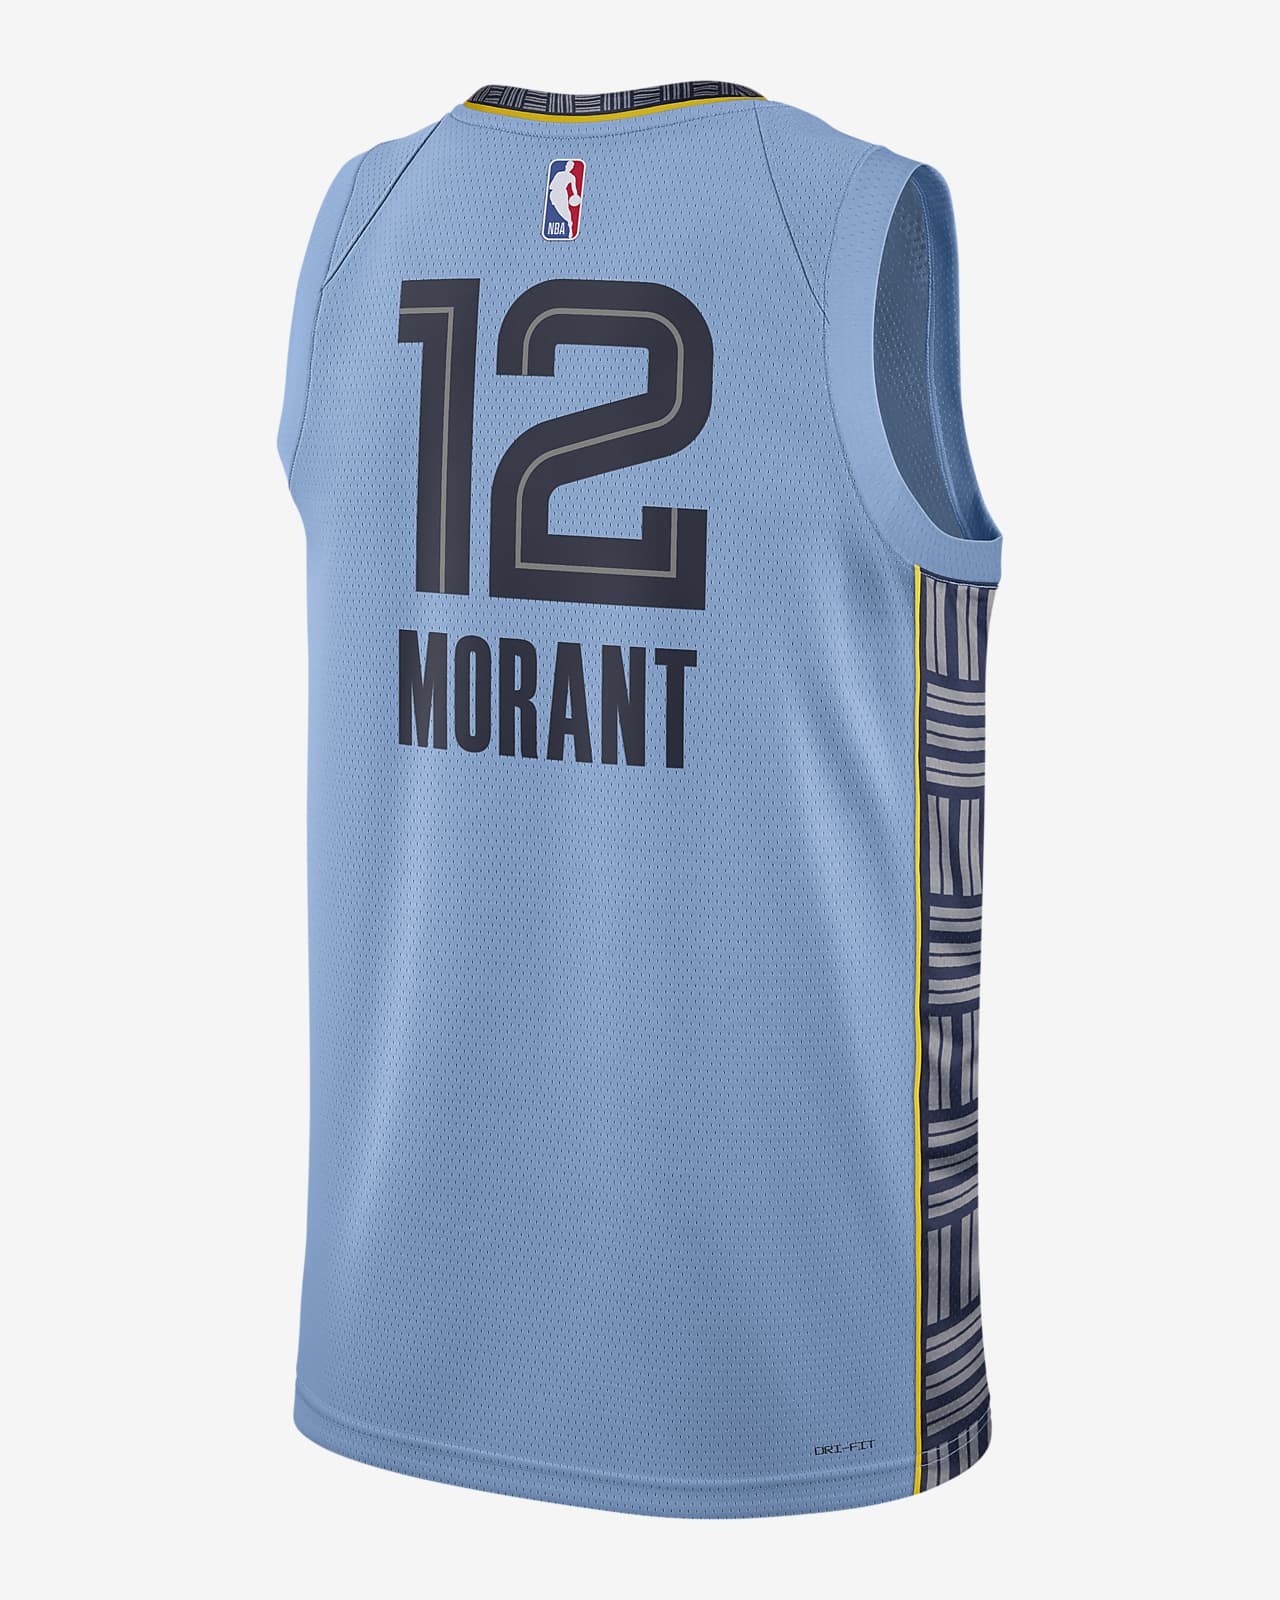 Men's Basketball Jersey #12 Ja Morant Memphis Grizzlies Swingman Jersey  Name and Number Player Sports T-Shirt Size S-XXL 